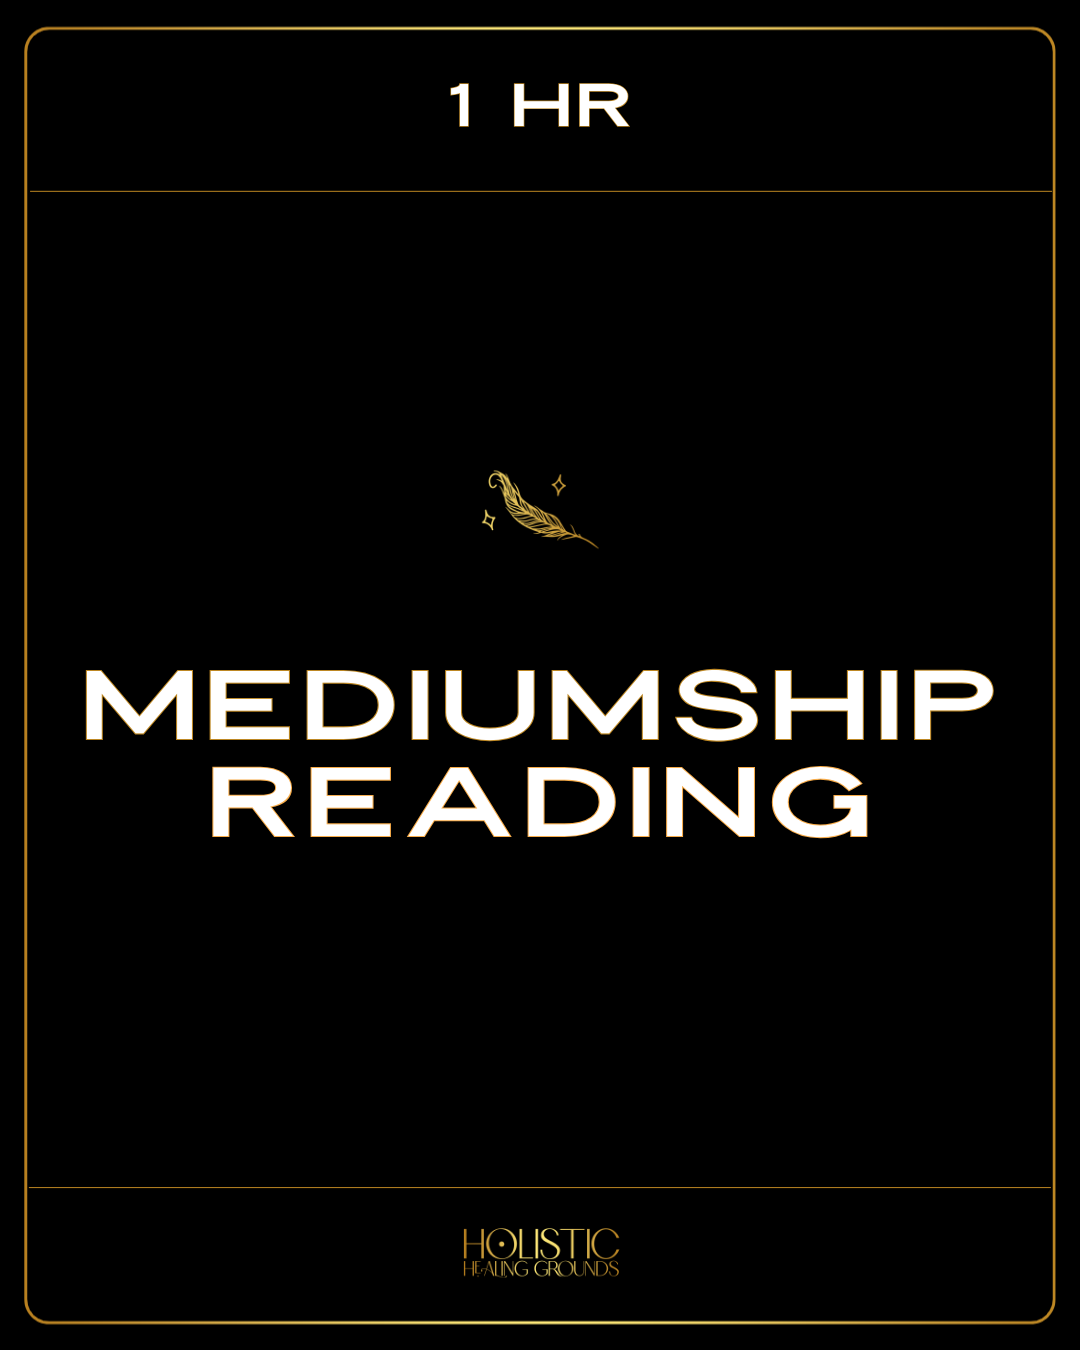 Mediumship (Meeting With Ancestors) Reading - 1 Hr